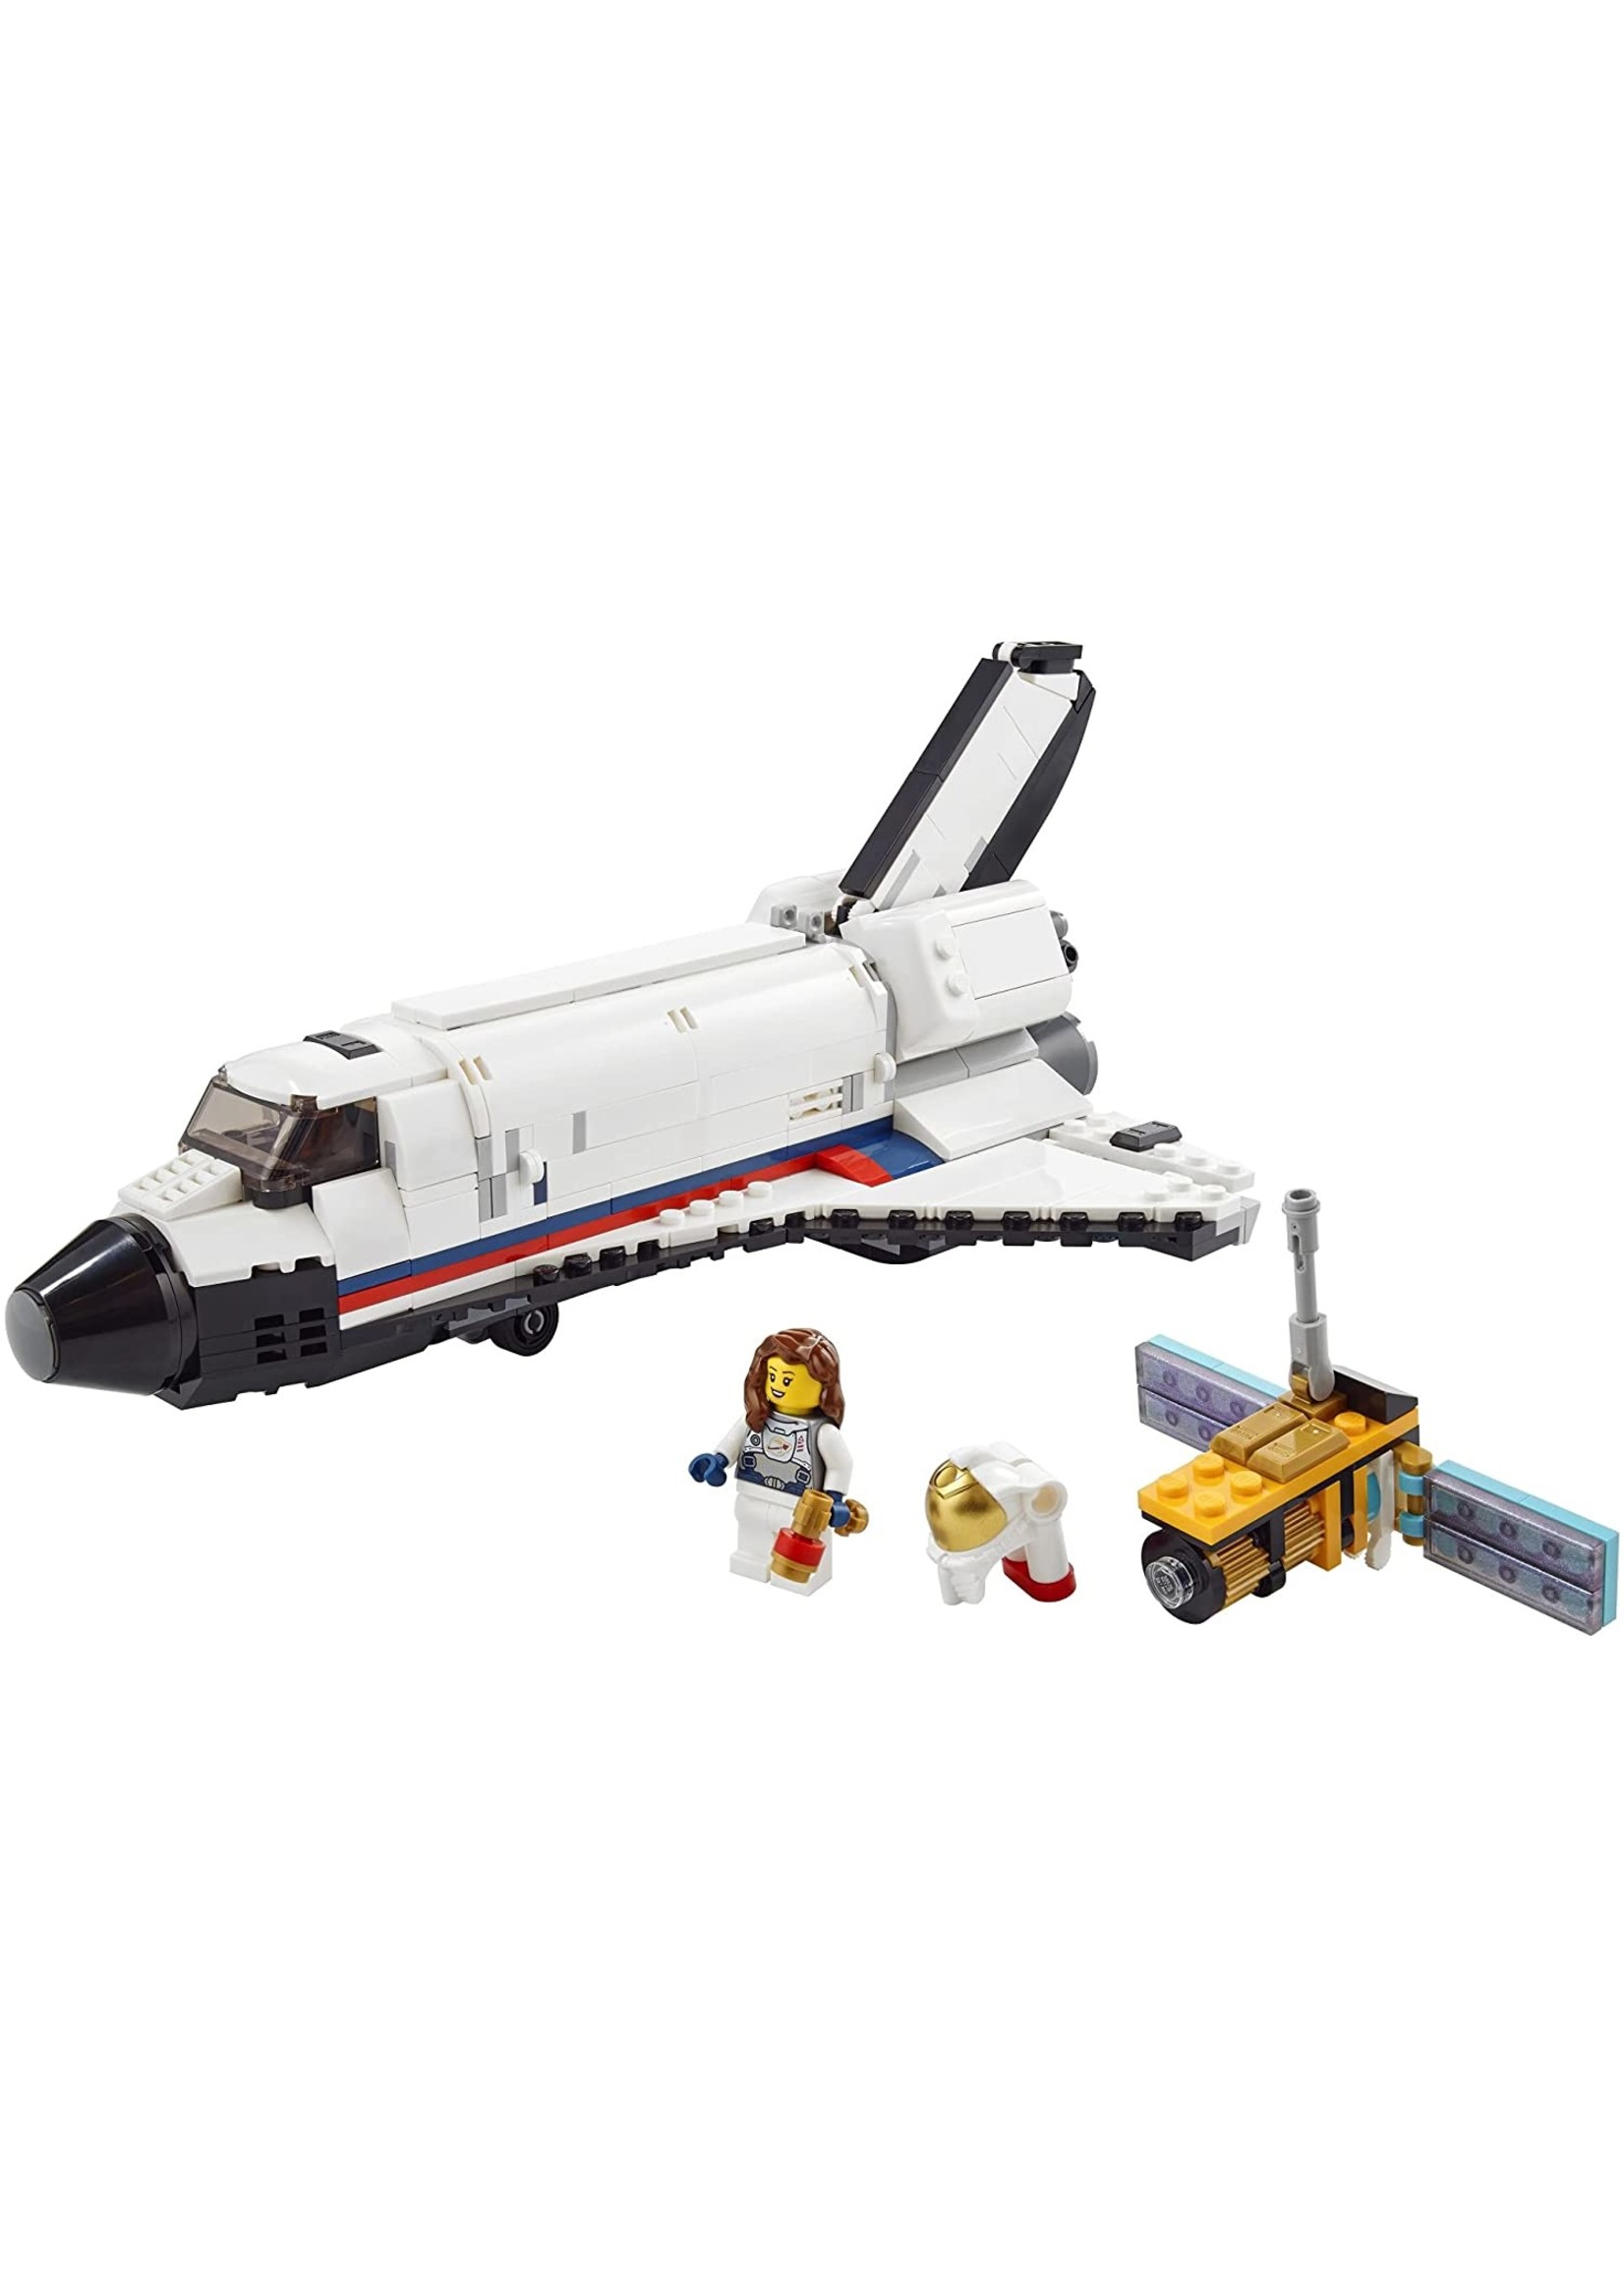 Lego 31117 - Space Shuttle Adventure